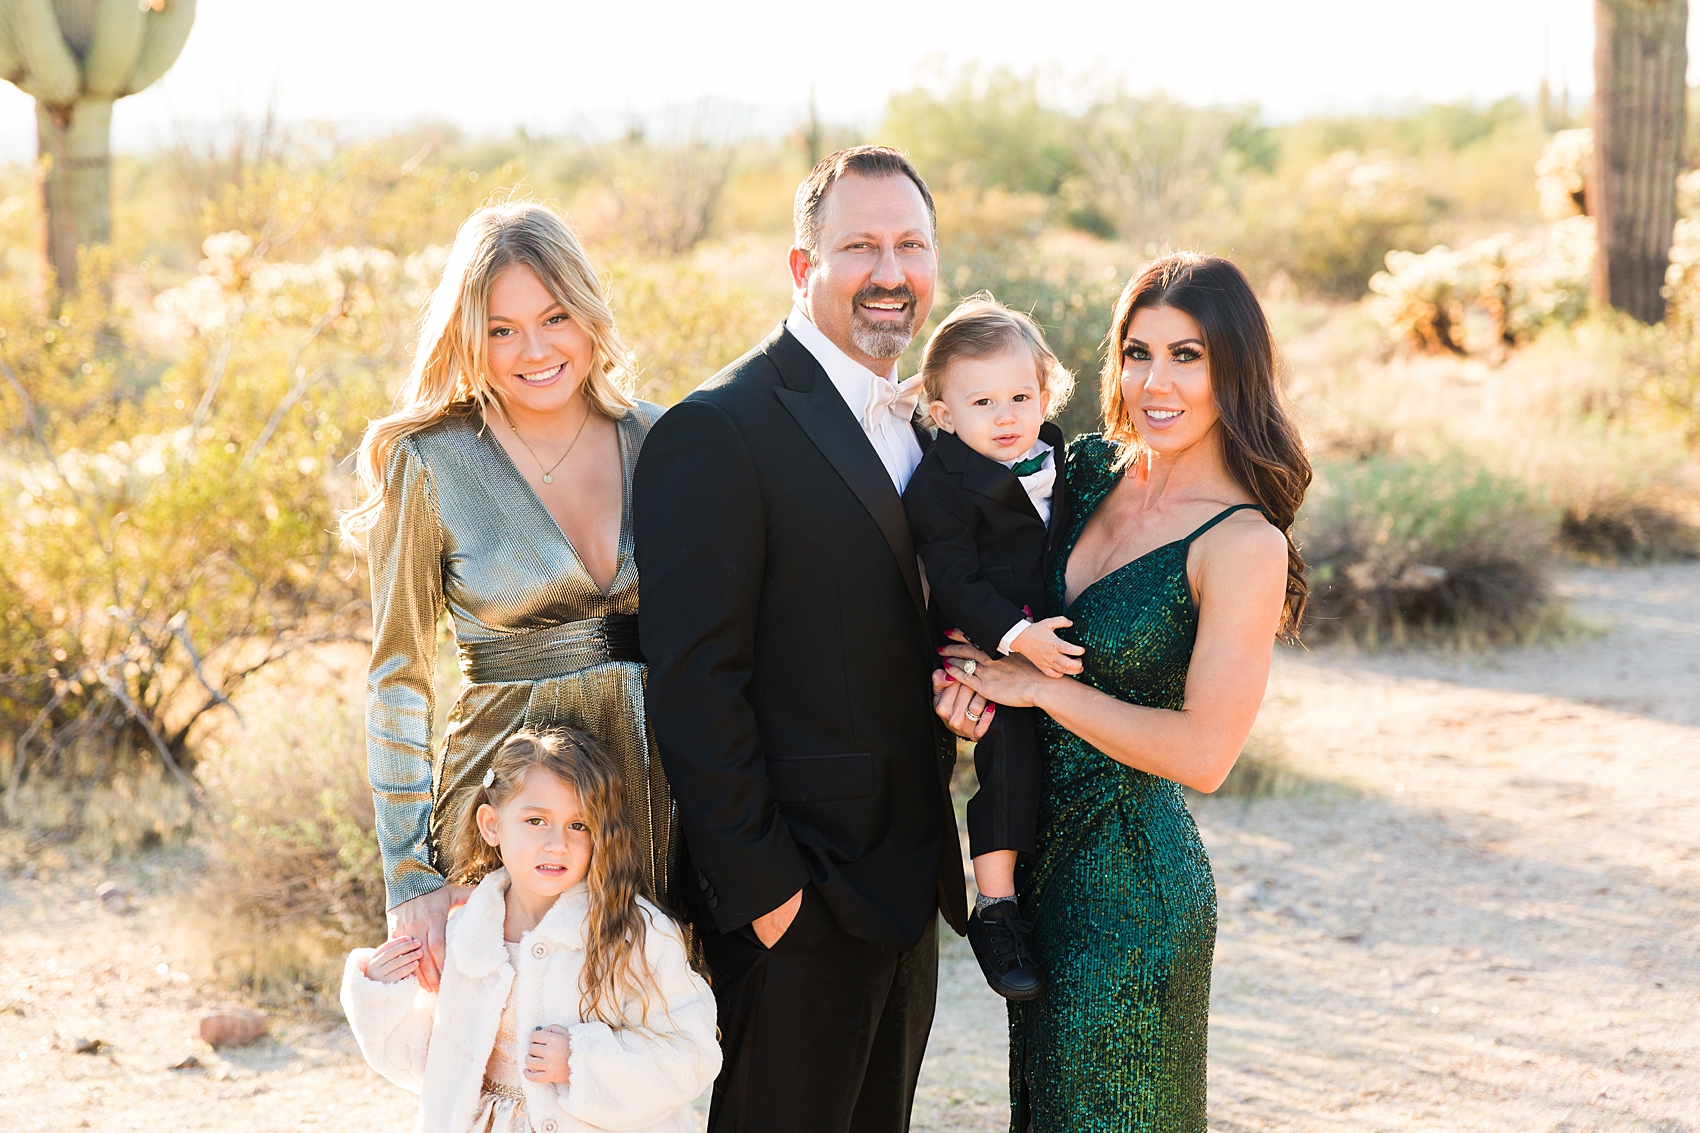 Leah Hope Photography | Scottsdale Phoenix Arizona | Desert Landscape Cactus Saguaro Scenery | Family Pictures | Elegant Glam Upscale Classy Family Photos | What to Wear | Family Poses